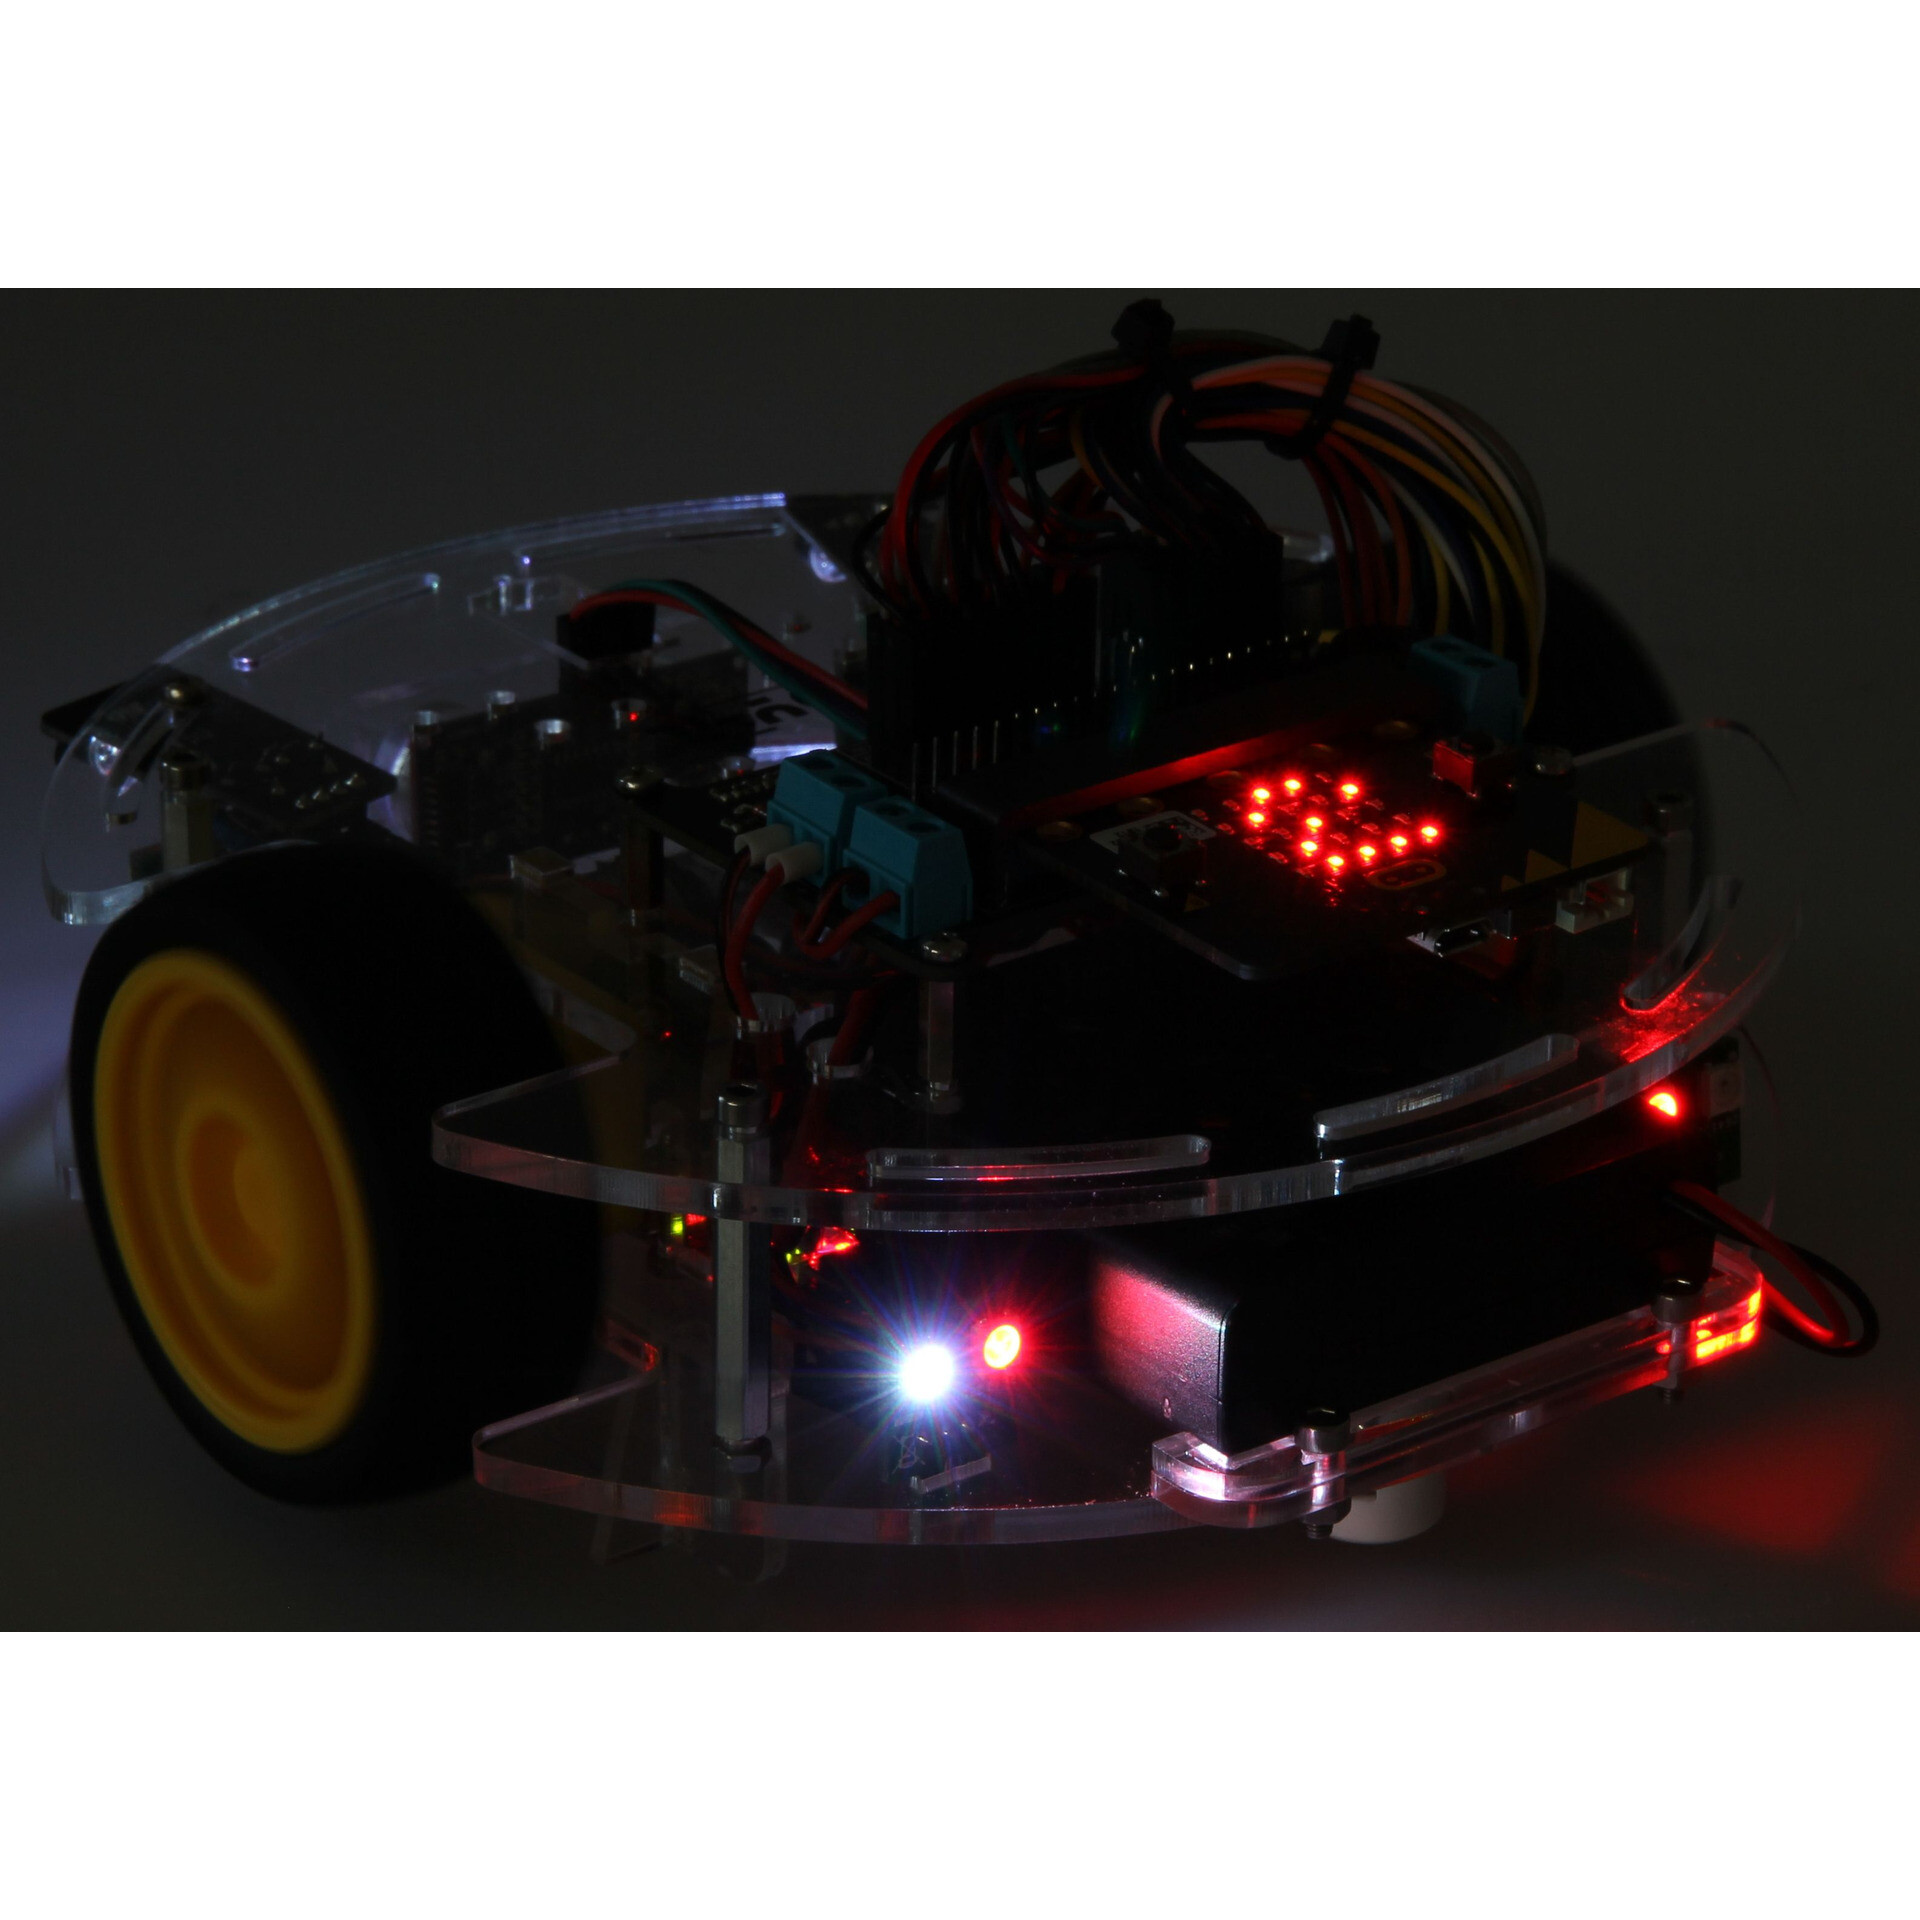 Joy-IT fertig montiertes programmierbares Roboterauto Joy-Car inkl. micro:bit v2 und beweglichem Ultraschallsensor